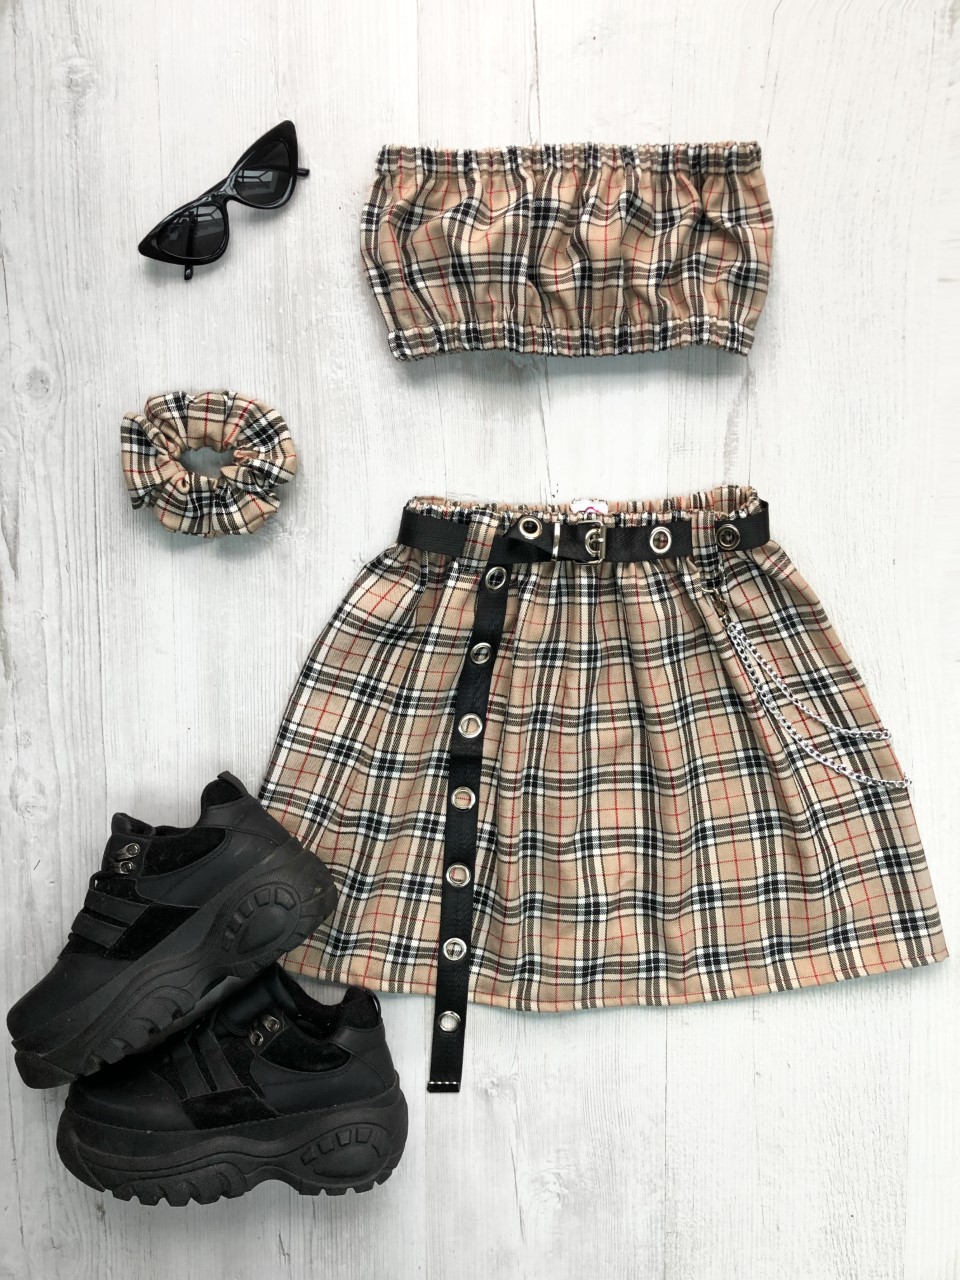 burberry skirt and top